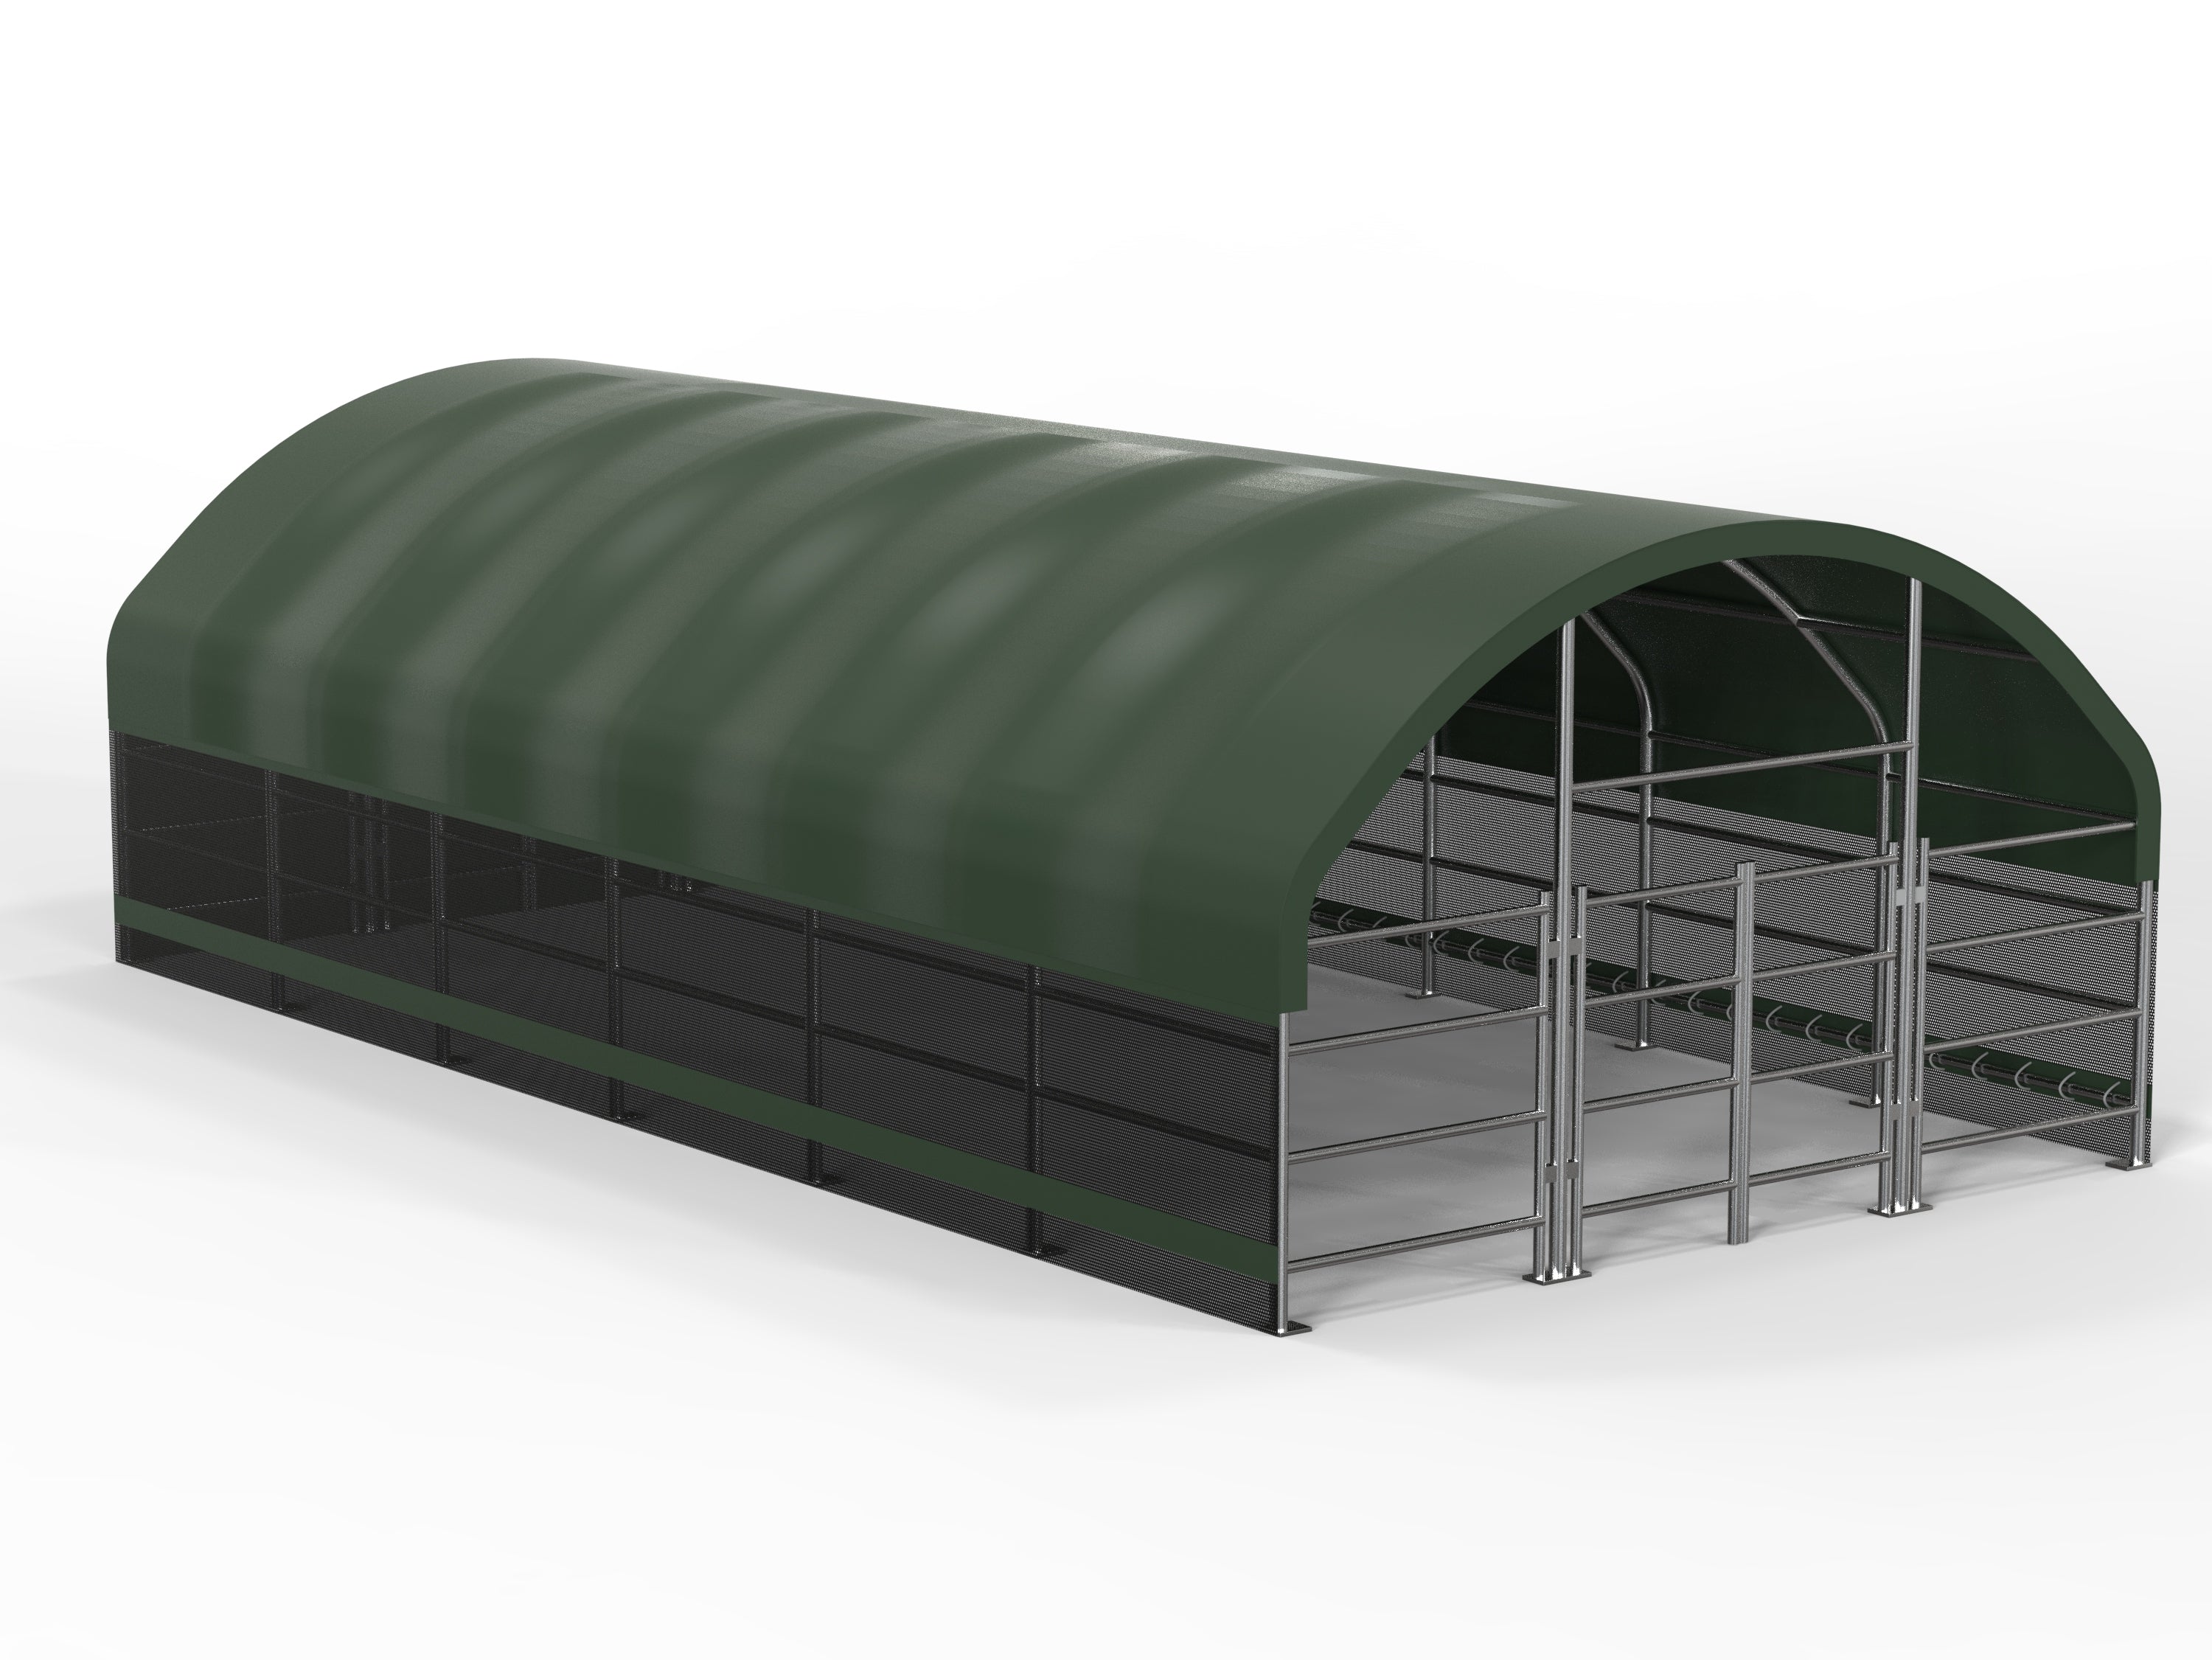 8m x 4m x2.4m (LxWxH) Enclosed livestock shelter - Green